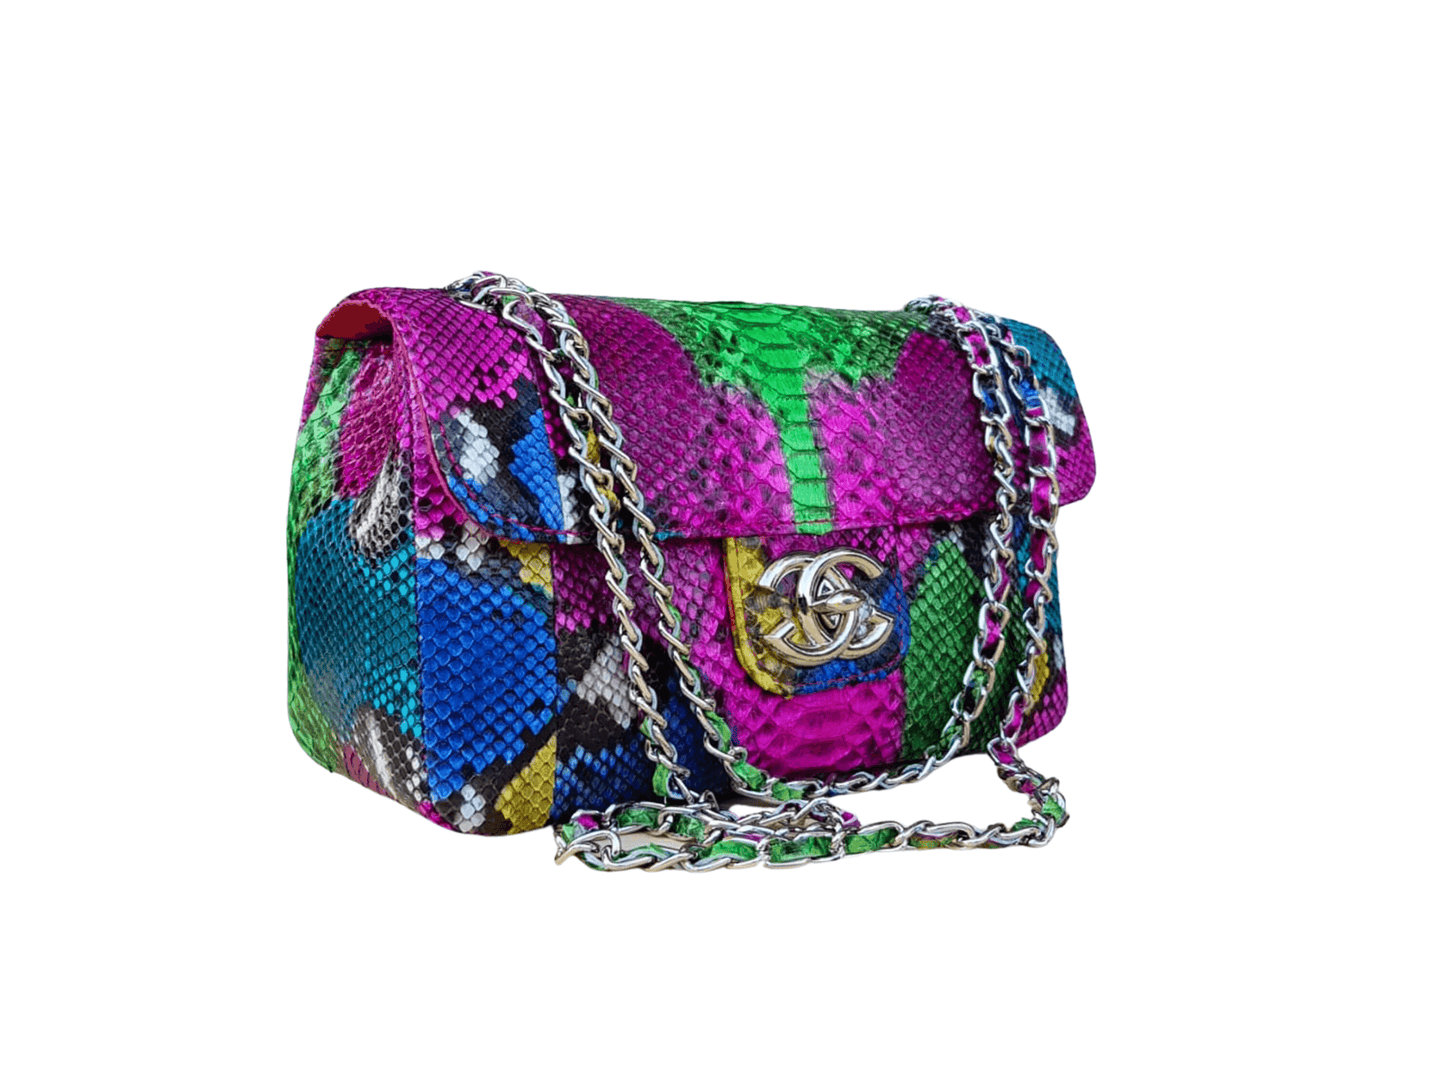 Chanel Small Flap Snakeskin Shoulder Bag Pink Python Jacket by LFM Fashion